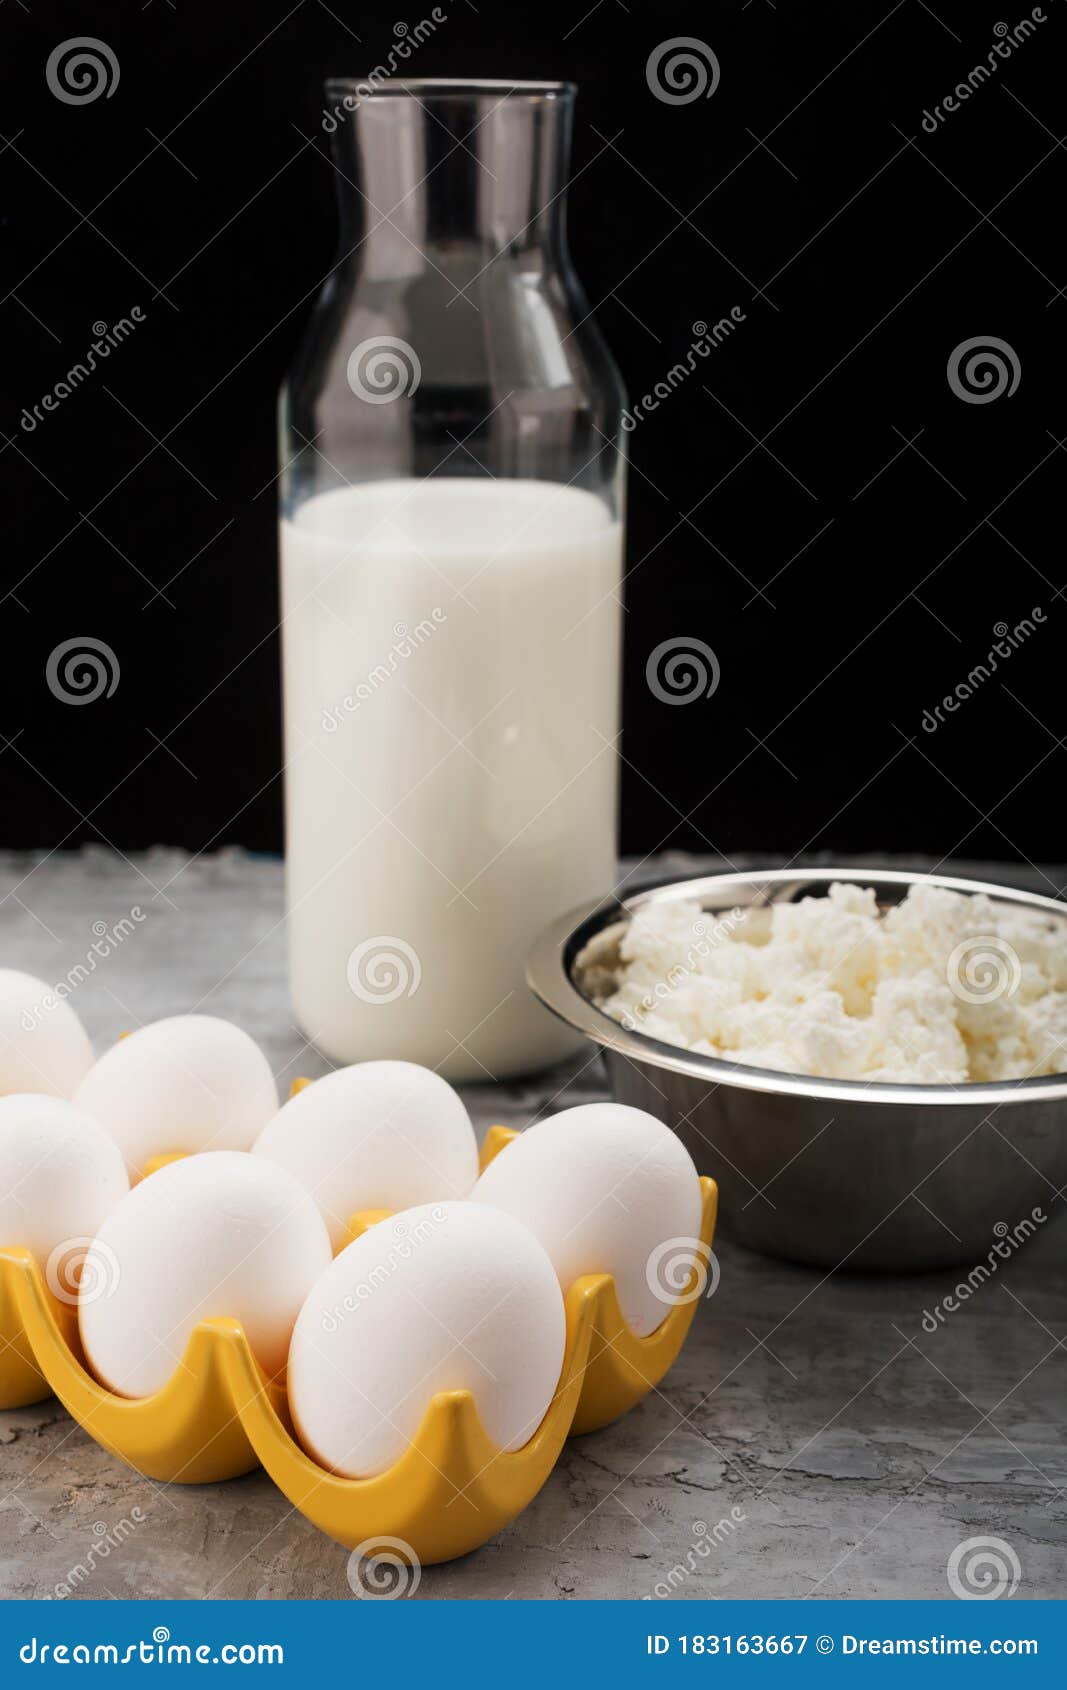 Egg milk steam фото 28